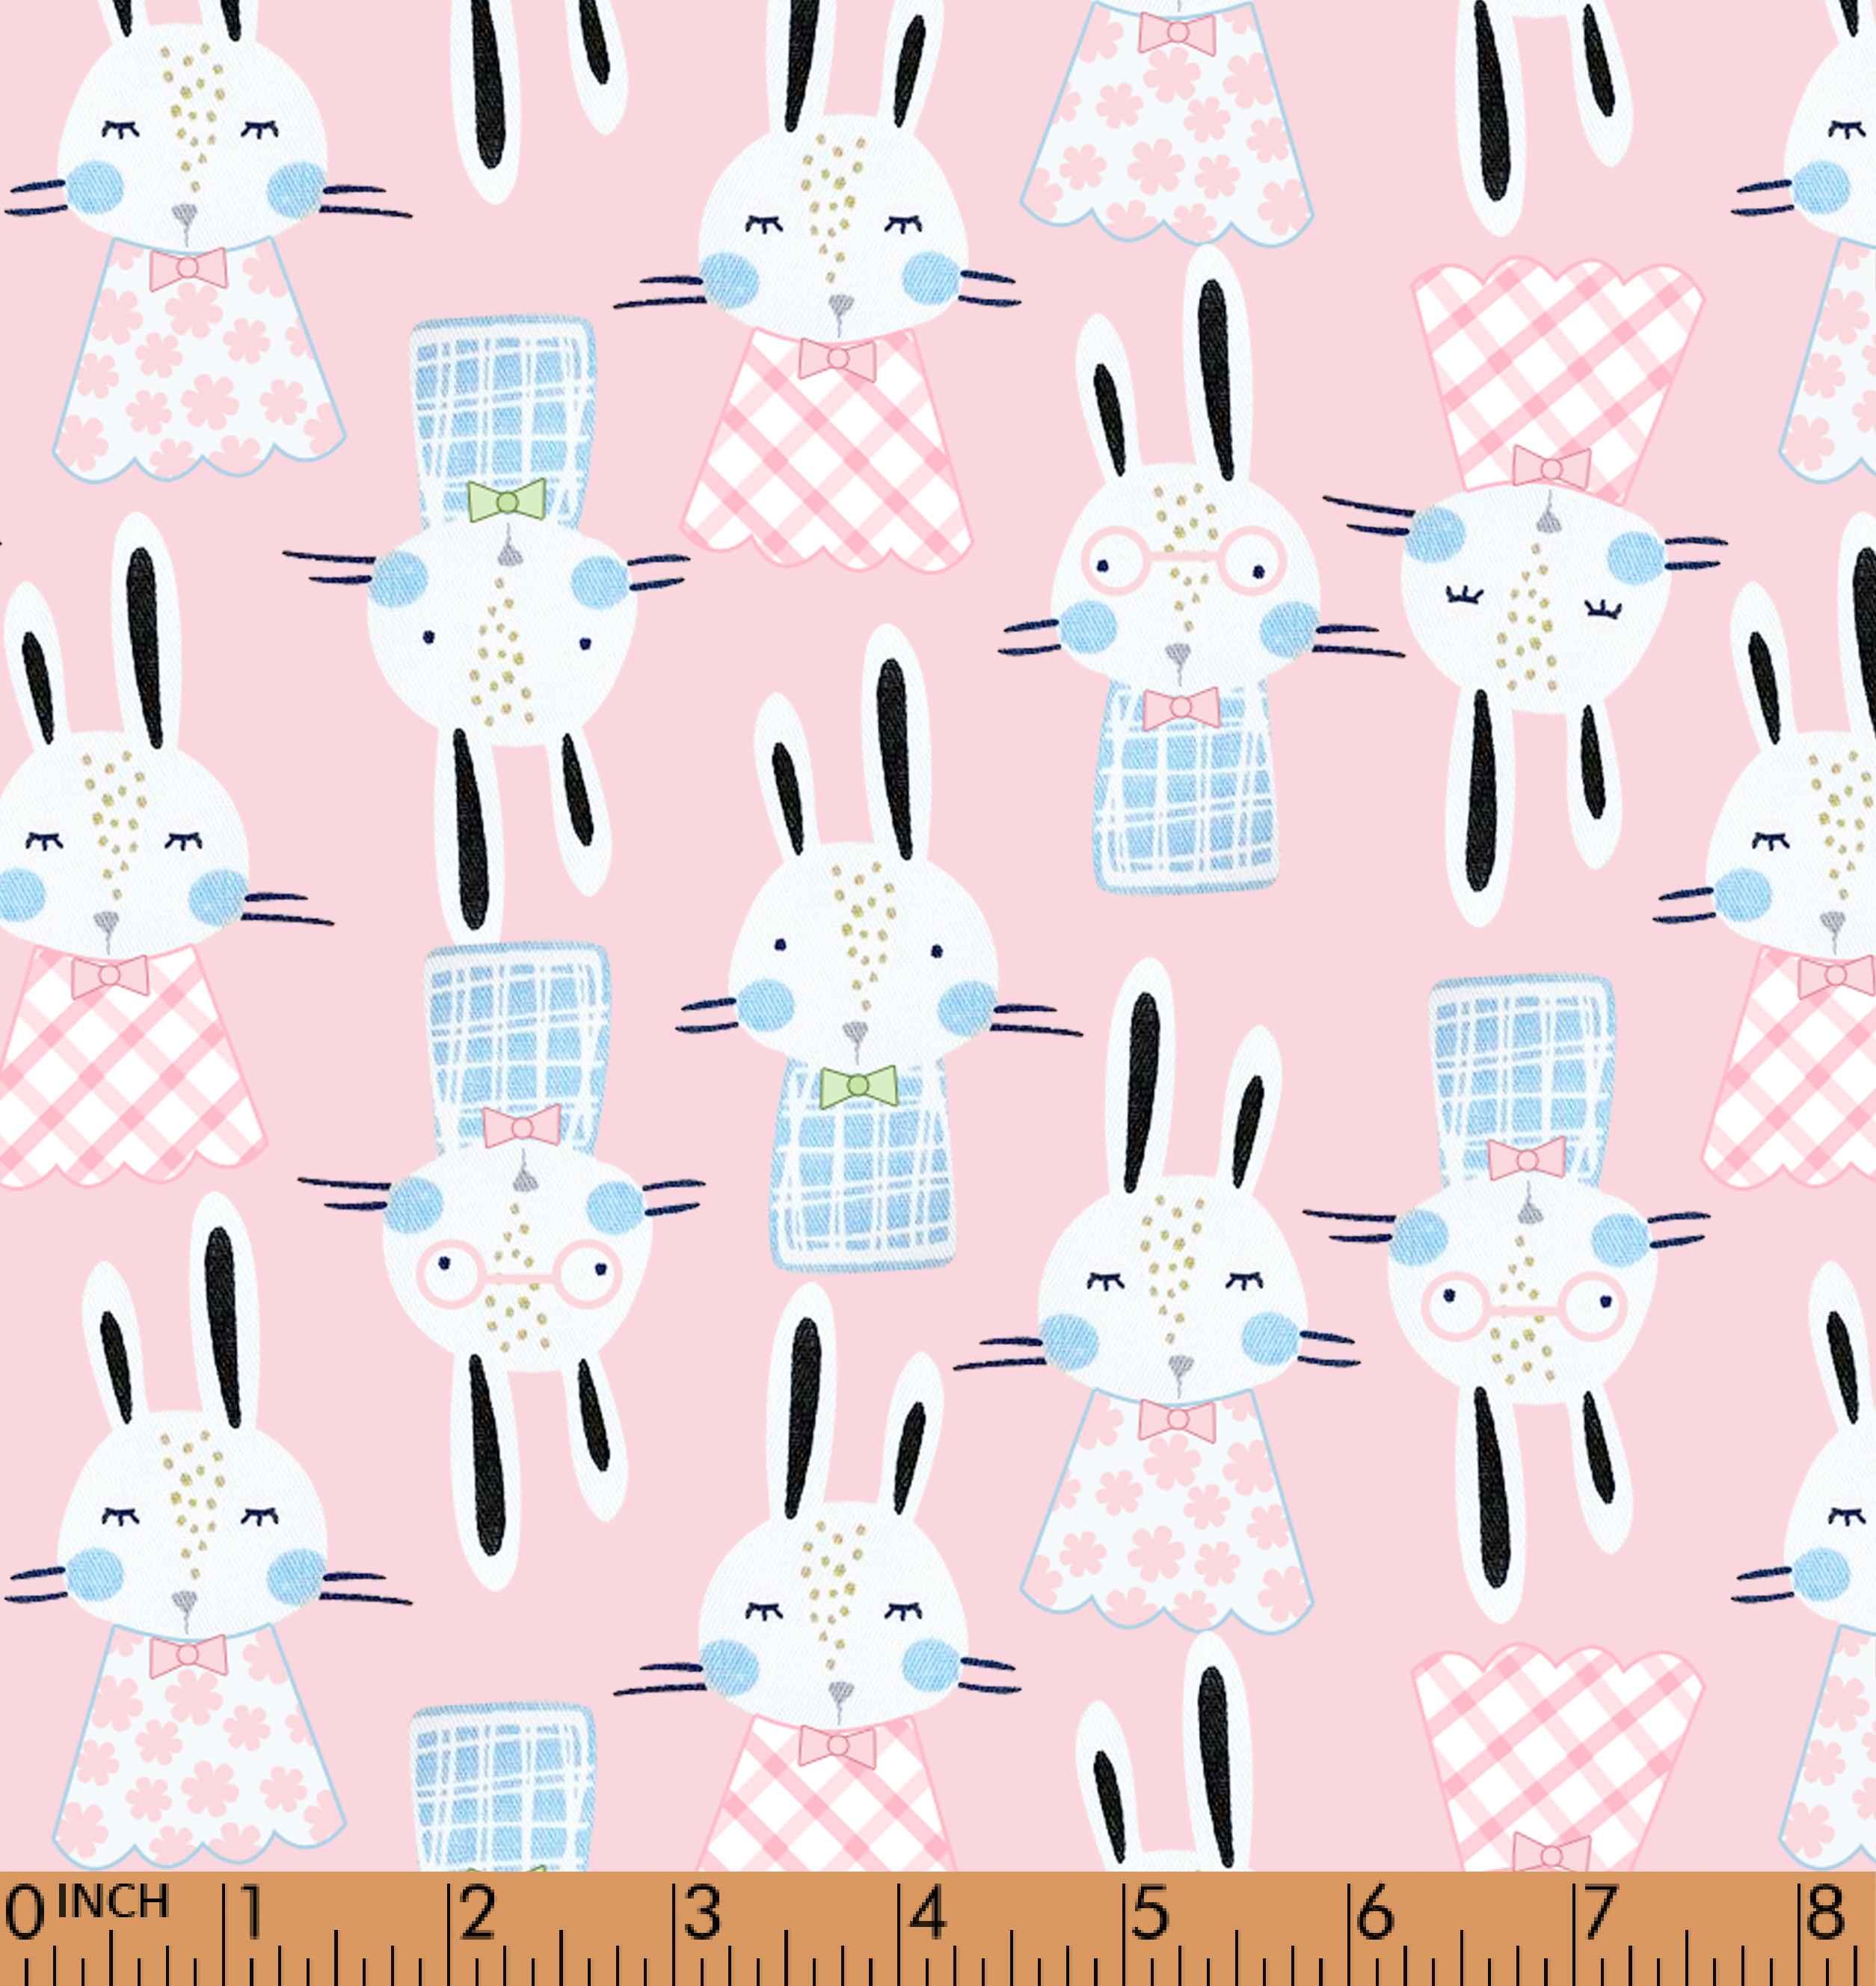 K271- Dressy rabbit in pink knit printing 4.0